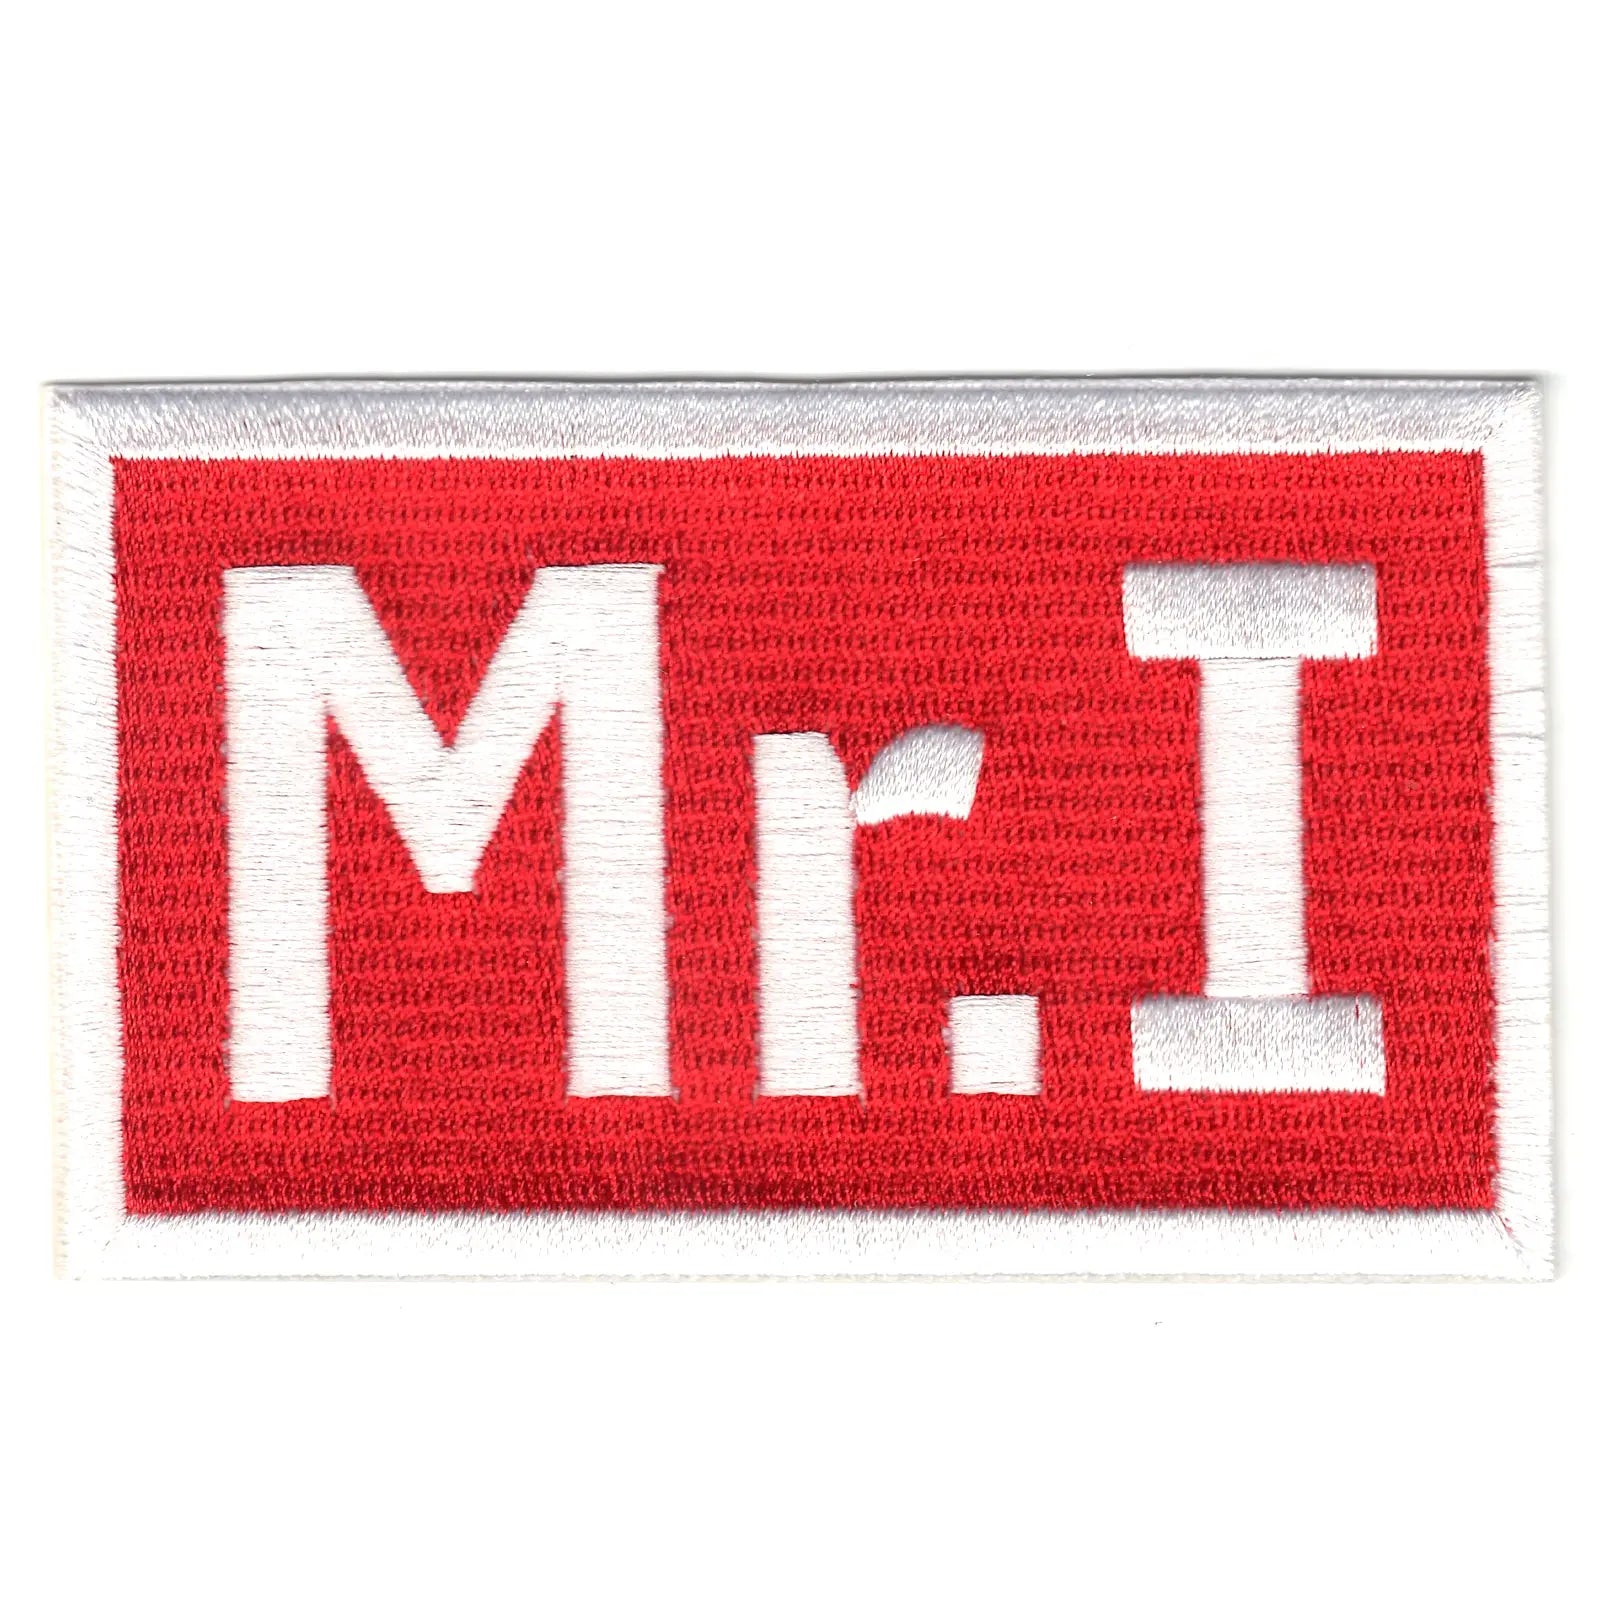 Mr 01. Mr1. Mr.1ance. M&M Red Patch. I mr2.